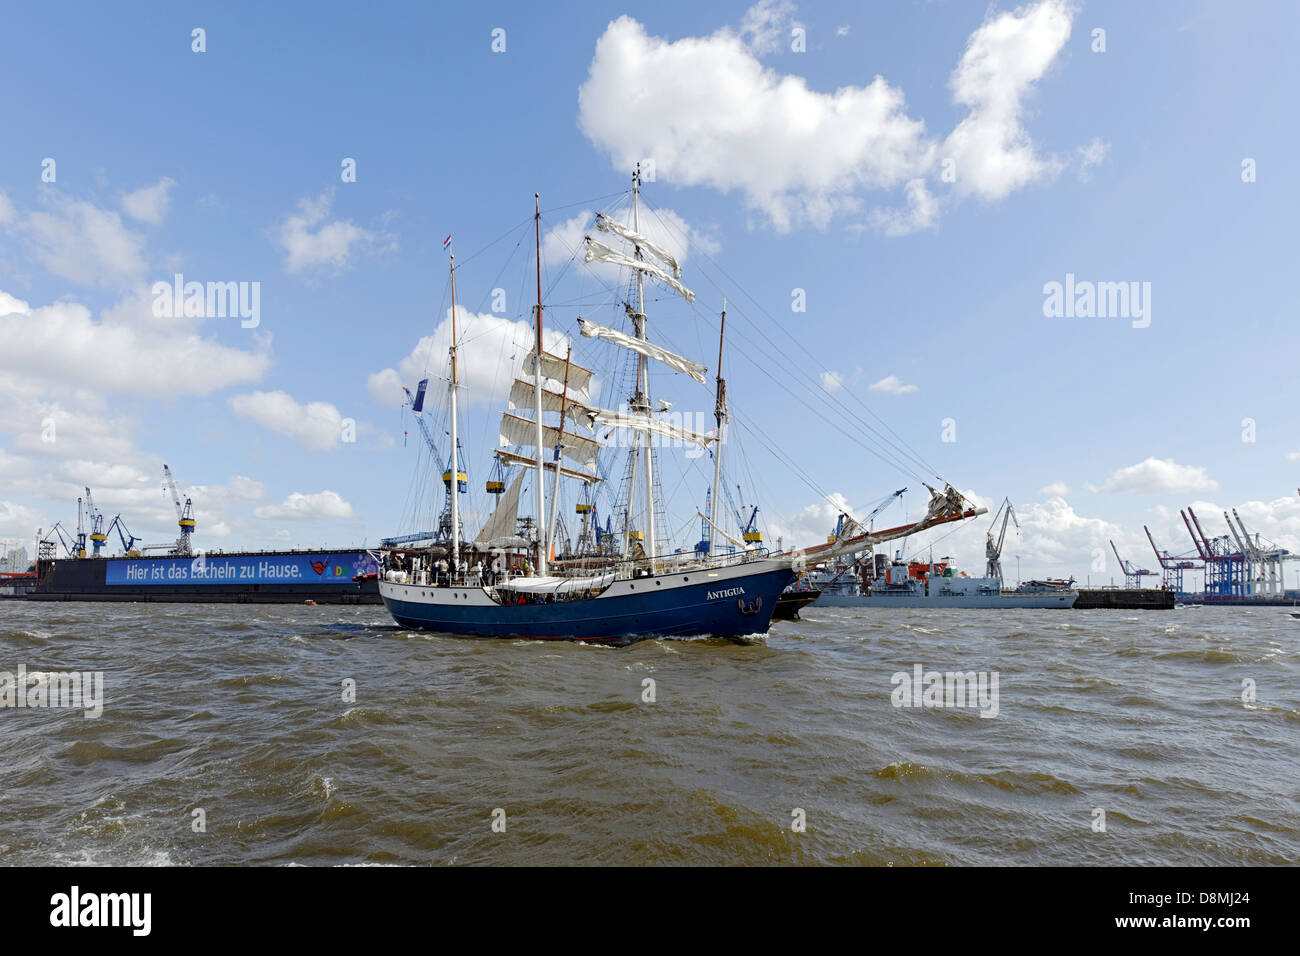 Sailing ship, Hamburg, Germany Stock Photo